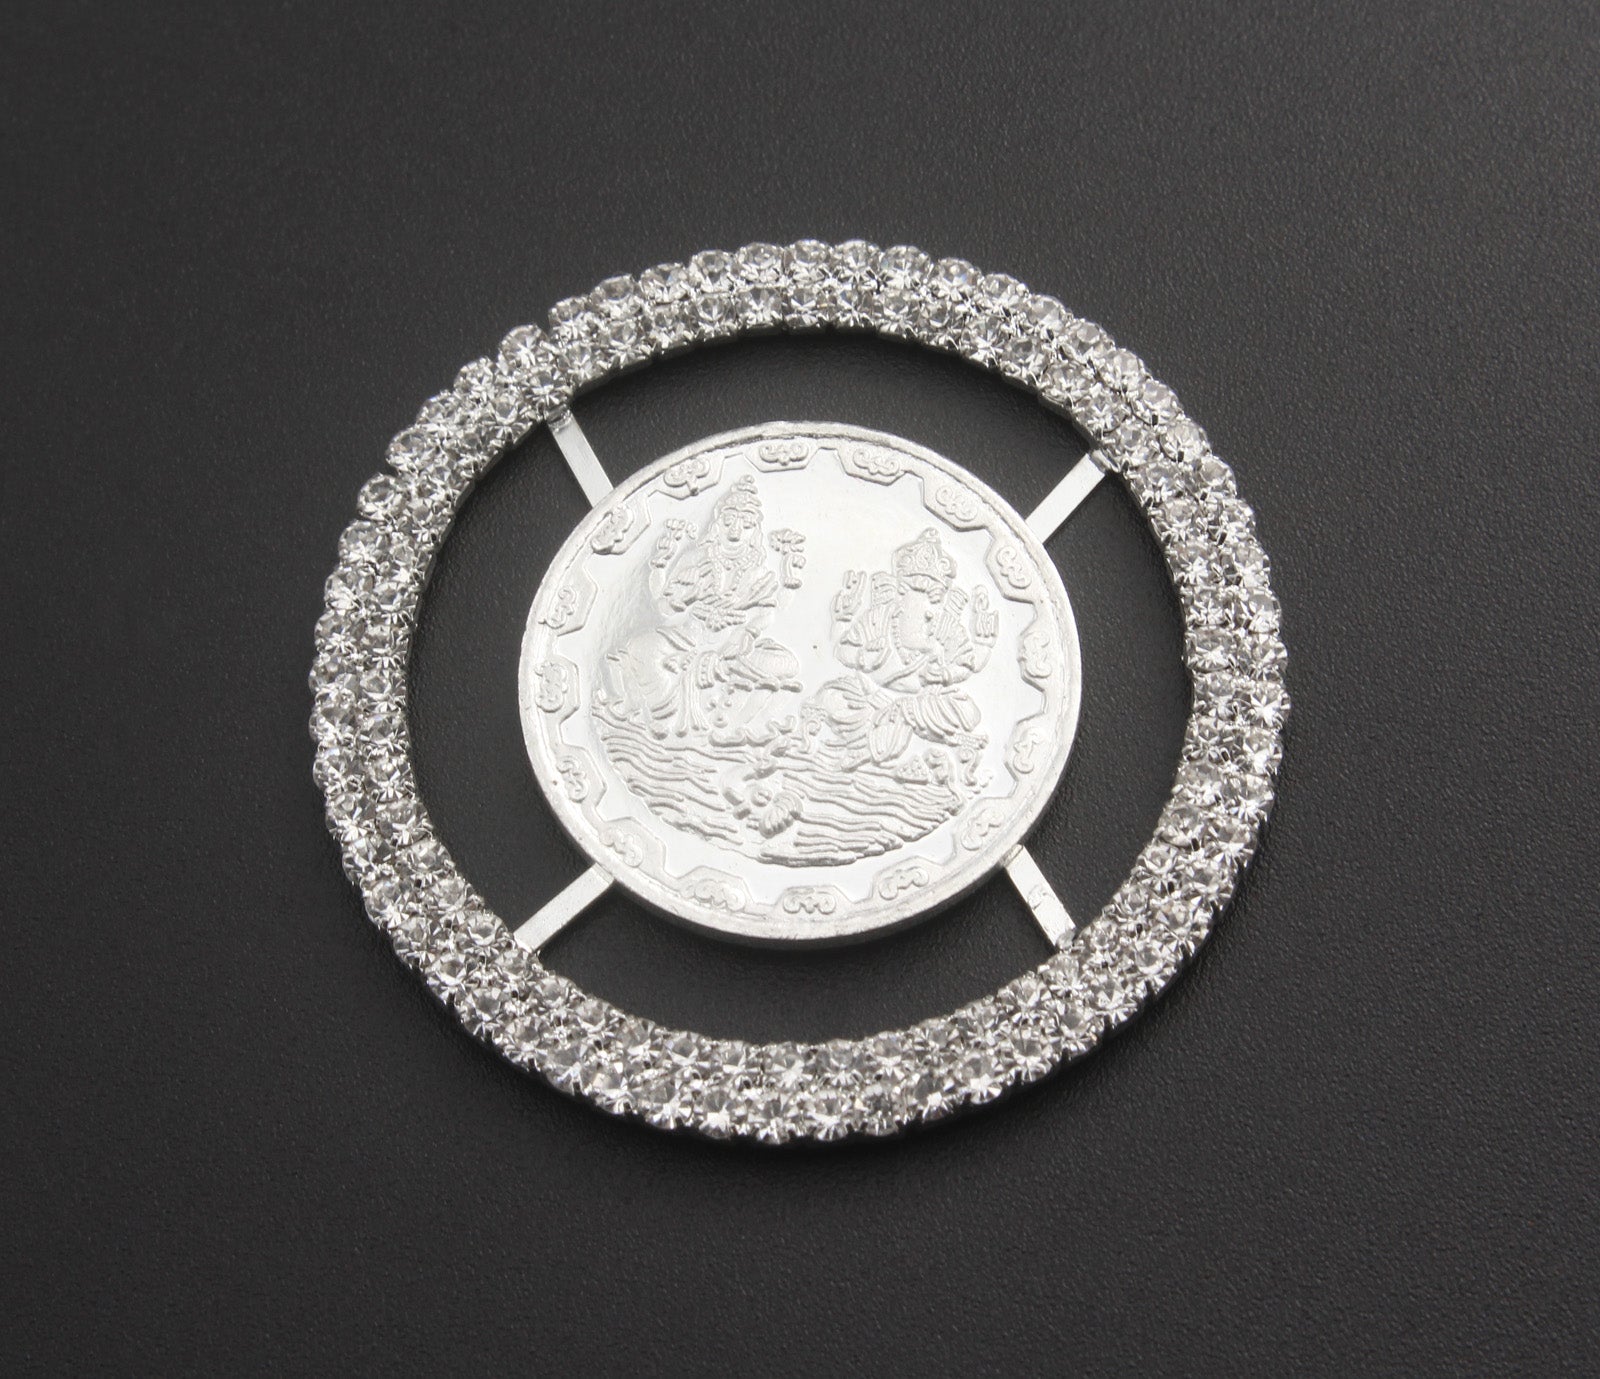 999 Silver Laxmi Ganesha Coin For Diwali And Dhanteras